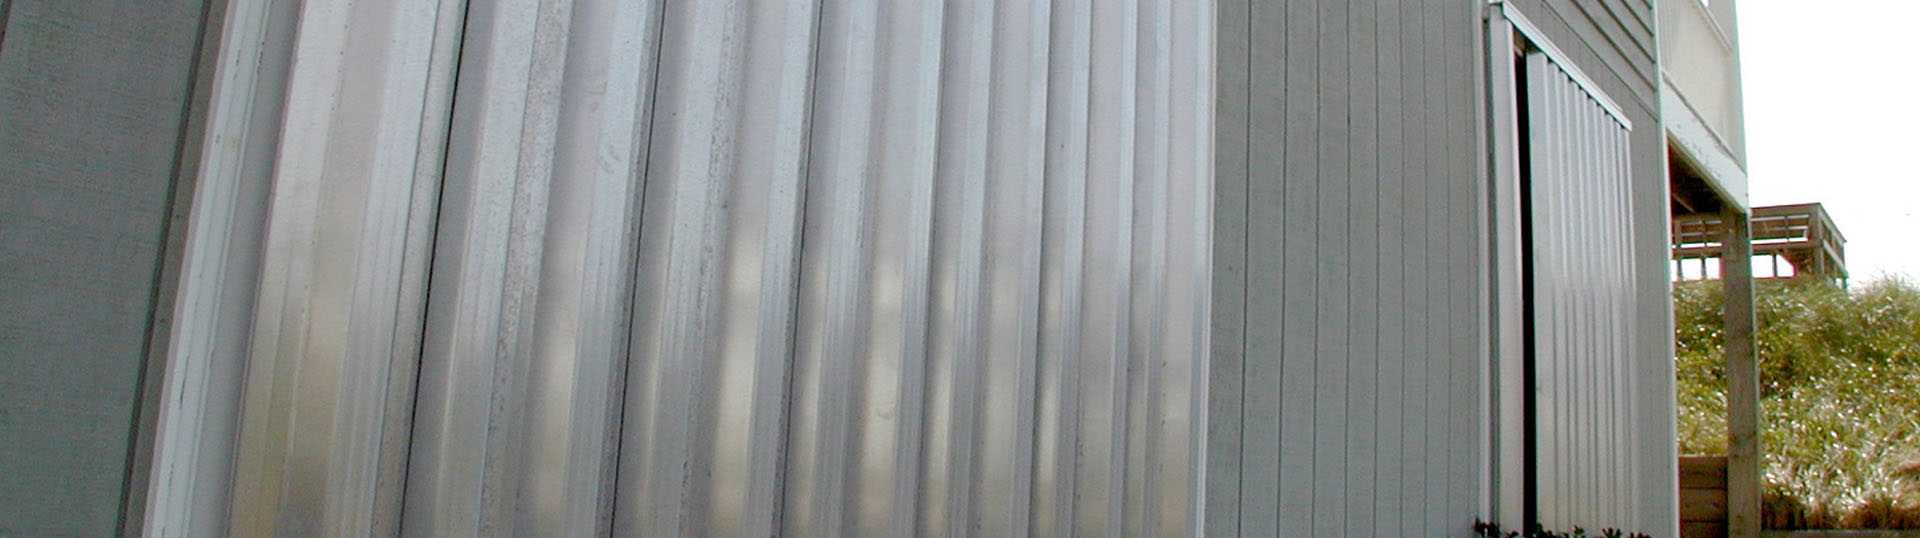 aluminium slider shutters